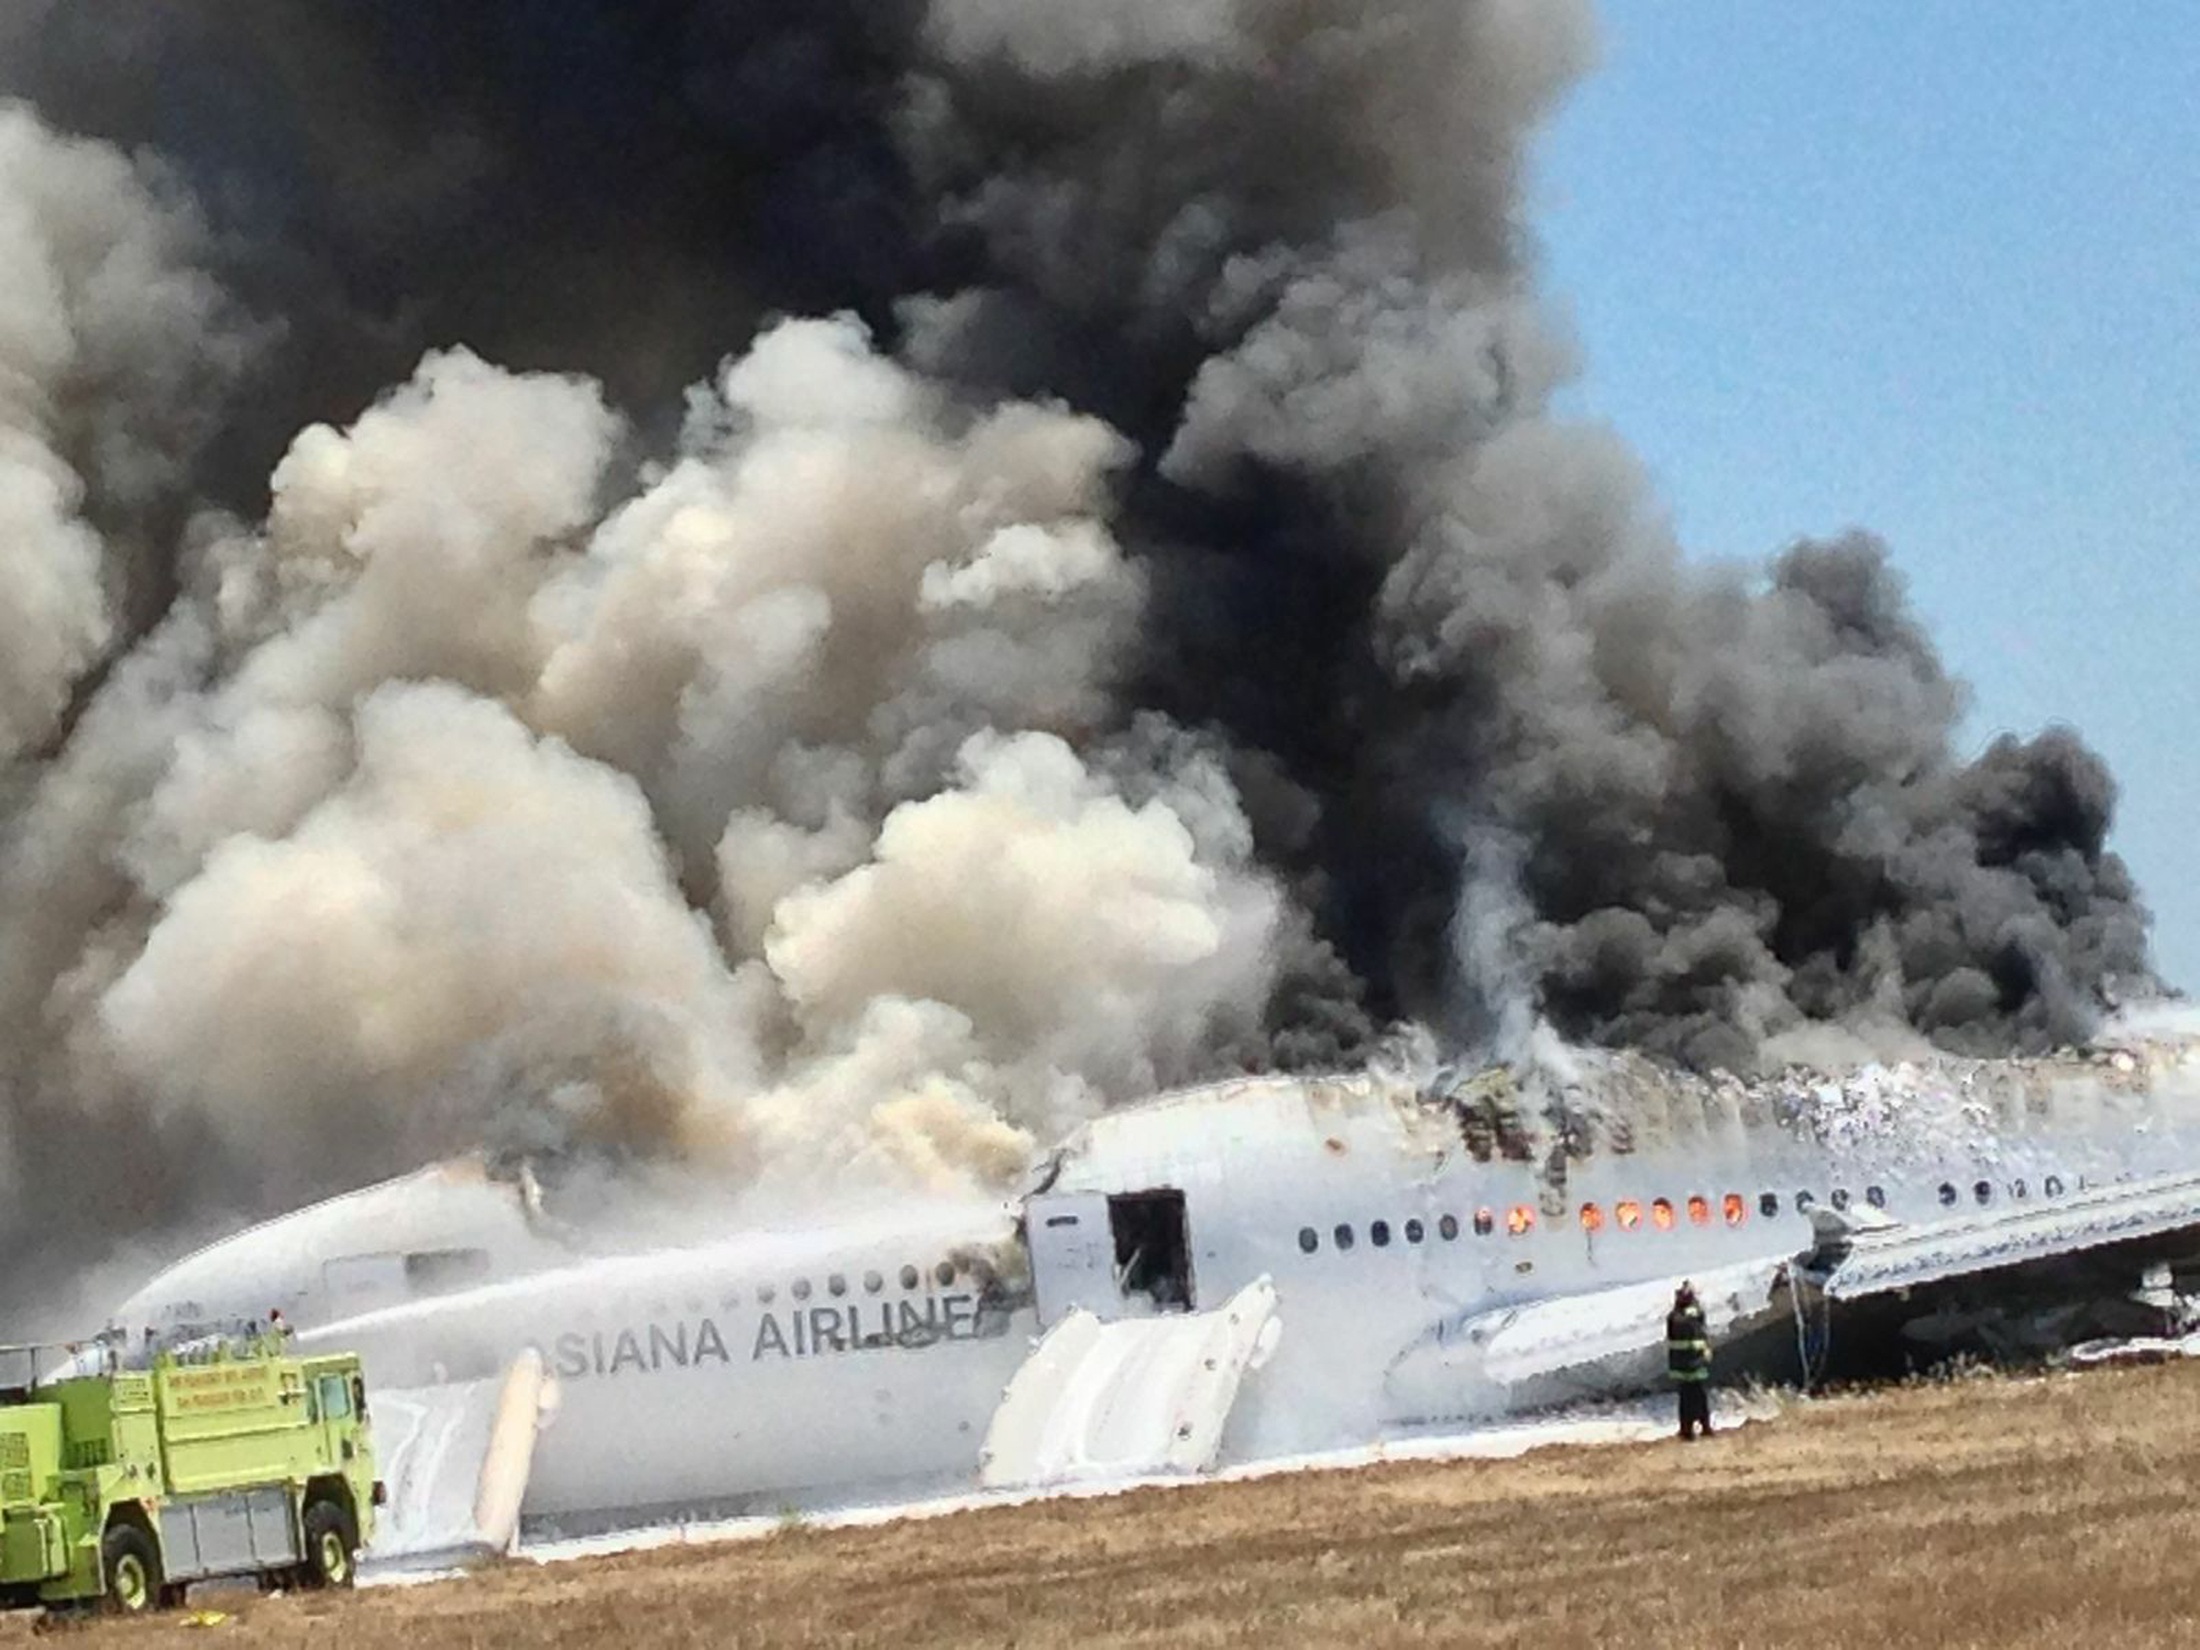 Passengers eye legal action against Boeing, Asiana over crash